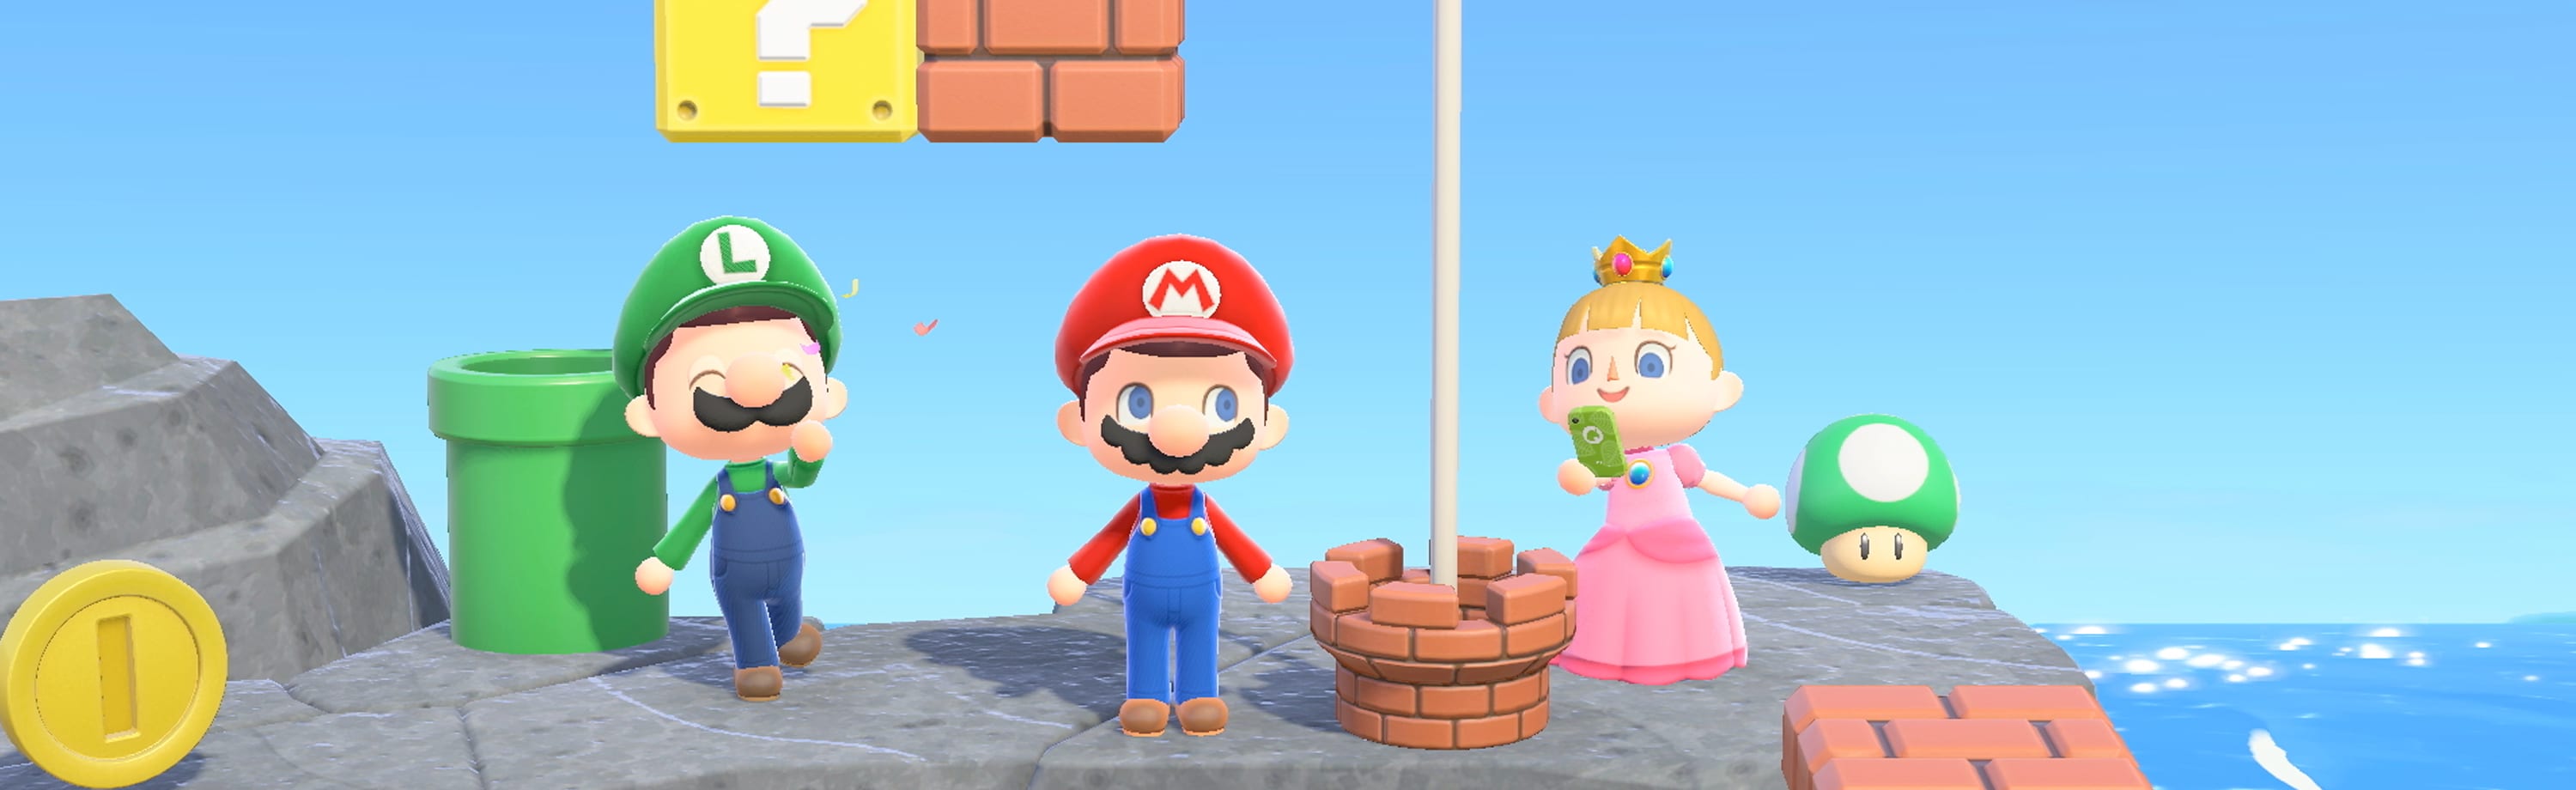 Animal Crossing: New Horizons and Mario